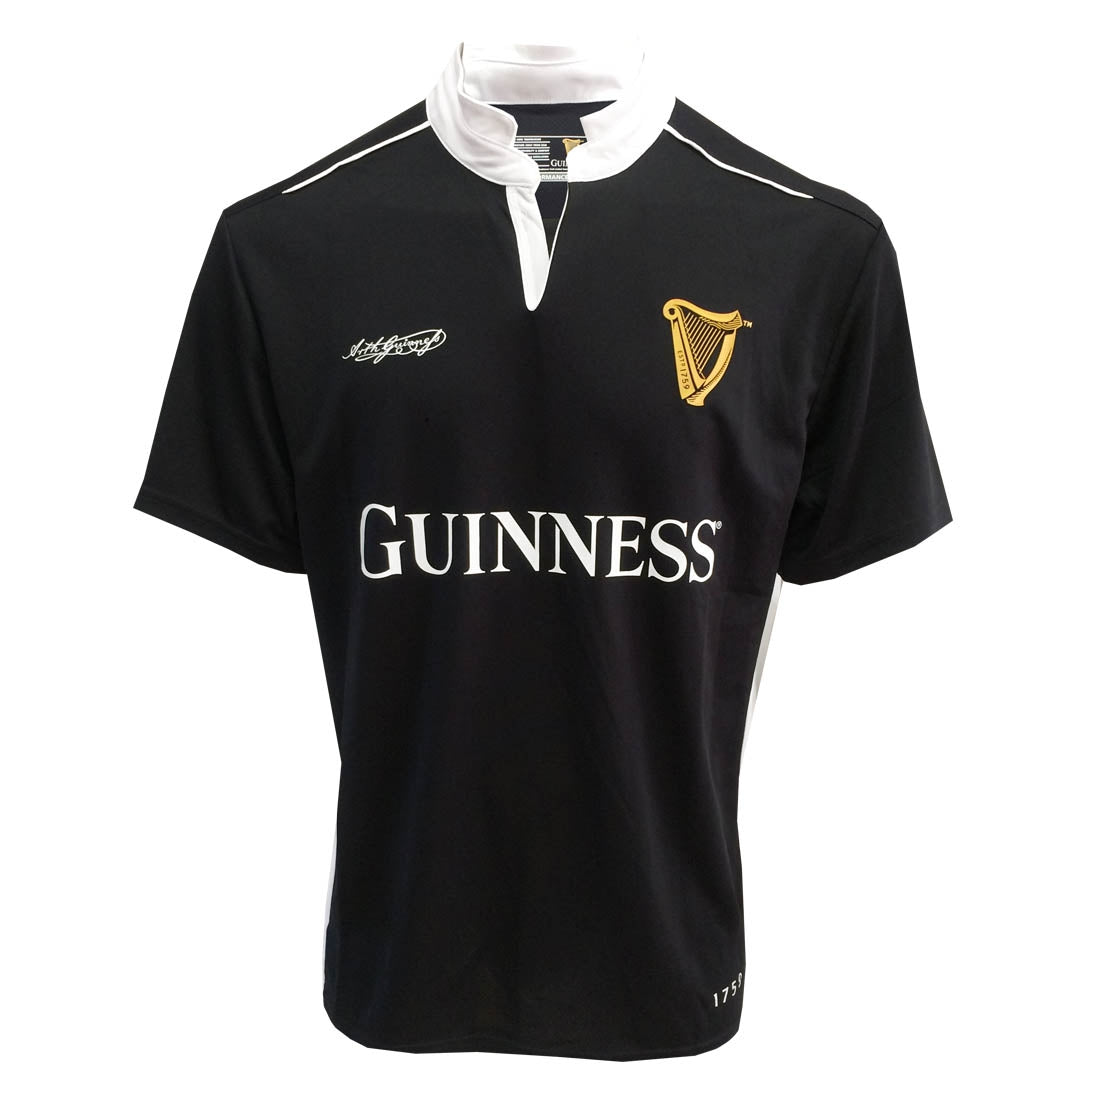 Guinness Black & White Performance Rugby (Short sleeve)